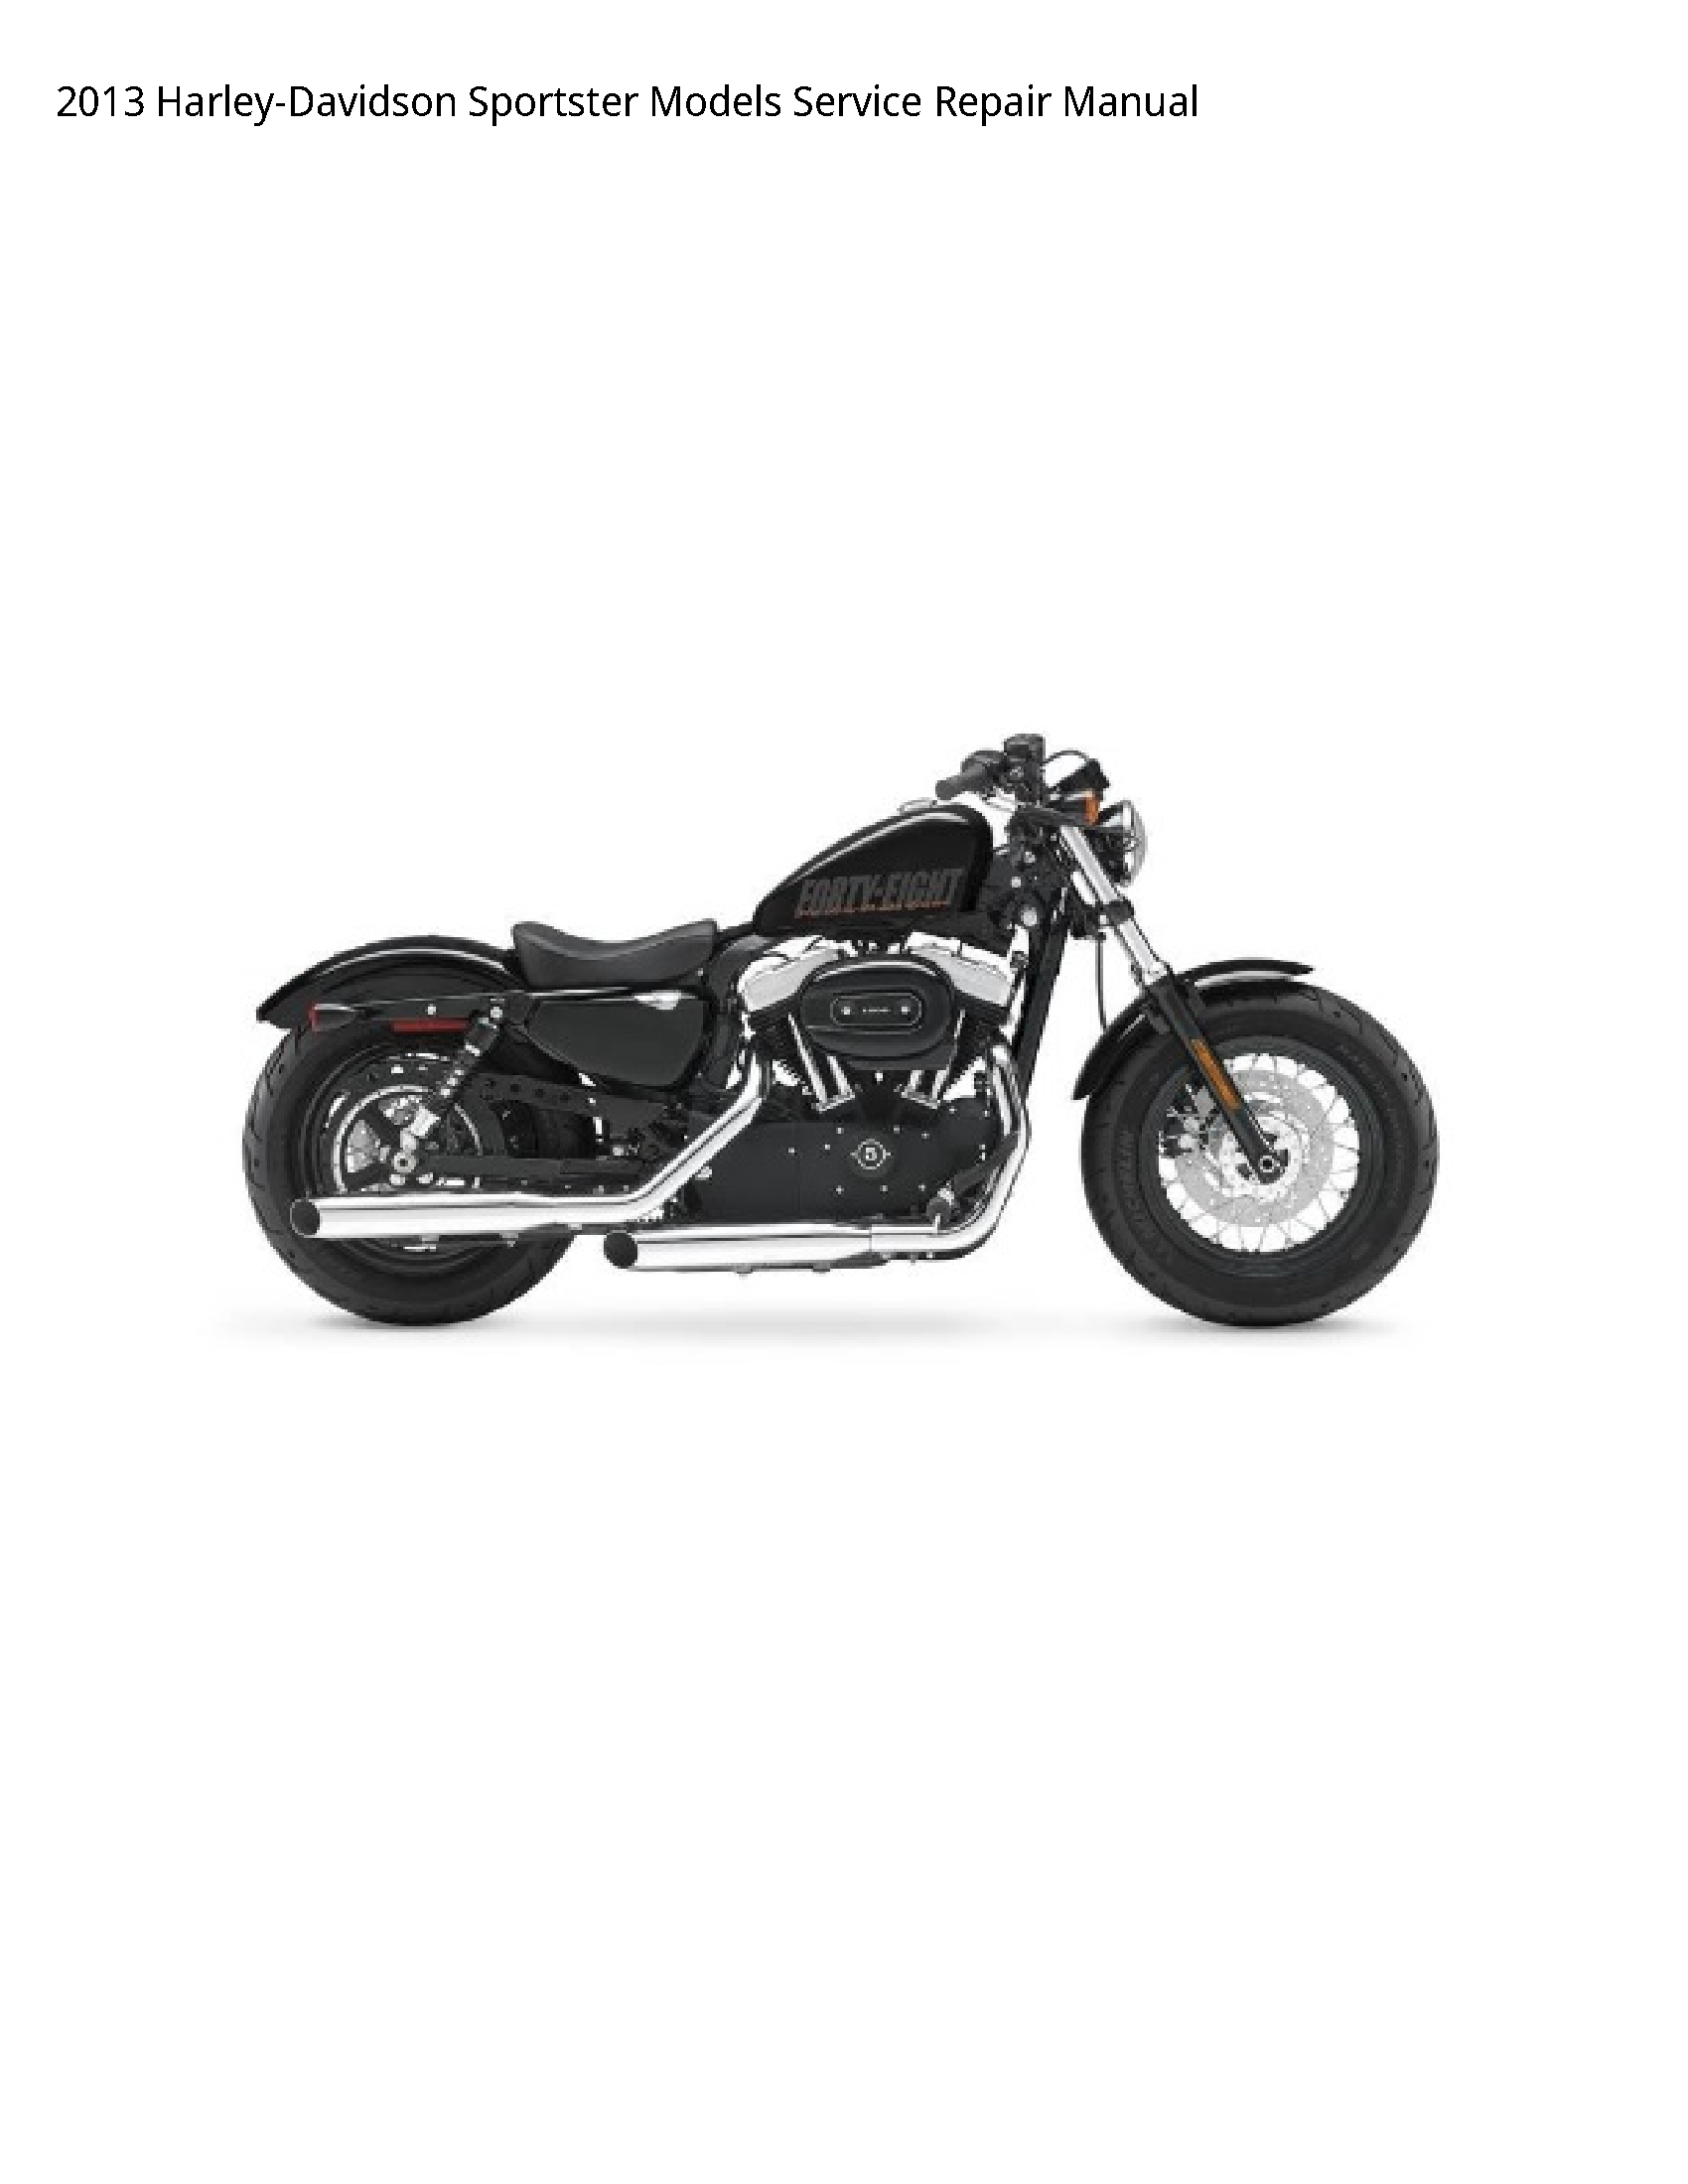 Harley Davidson Sportster manual